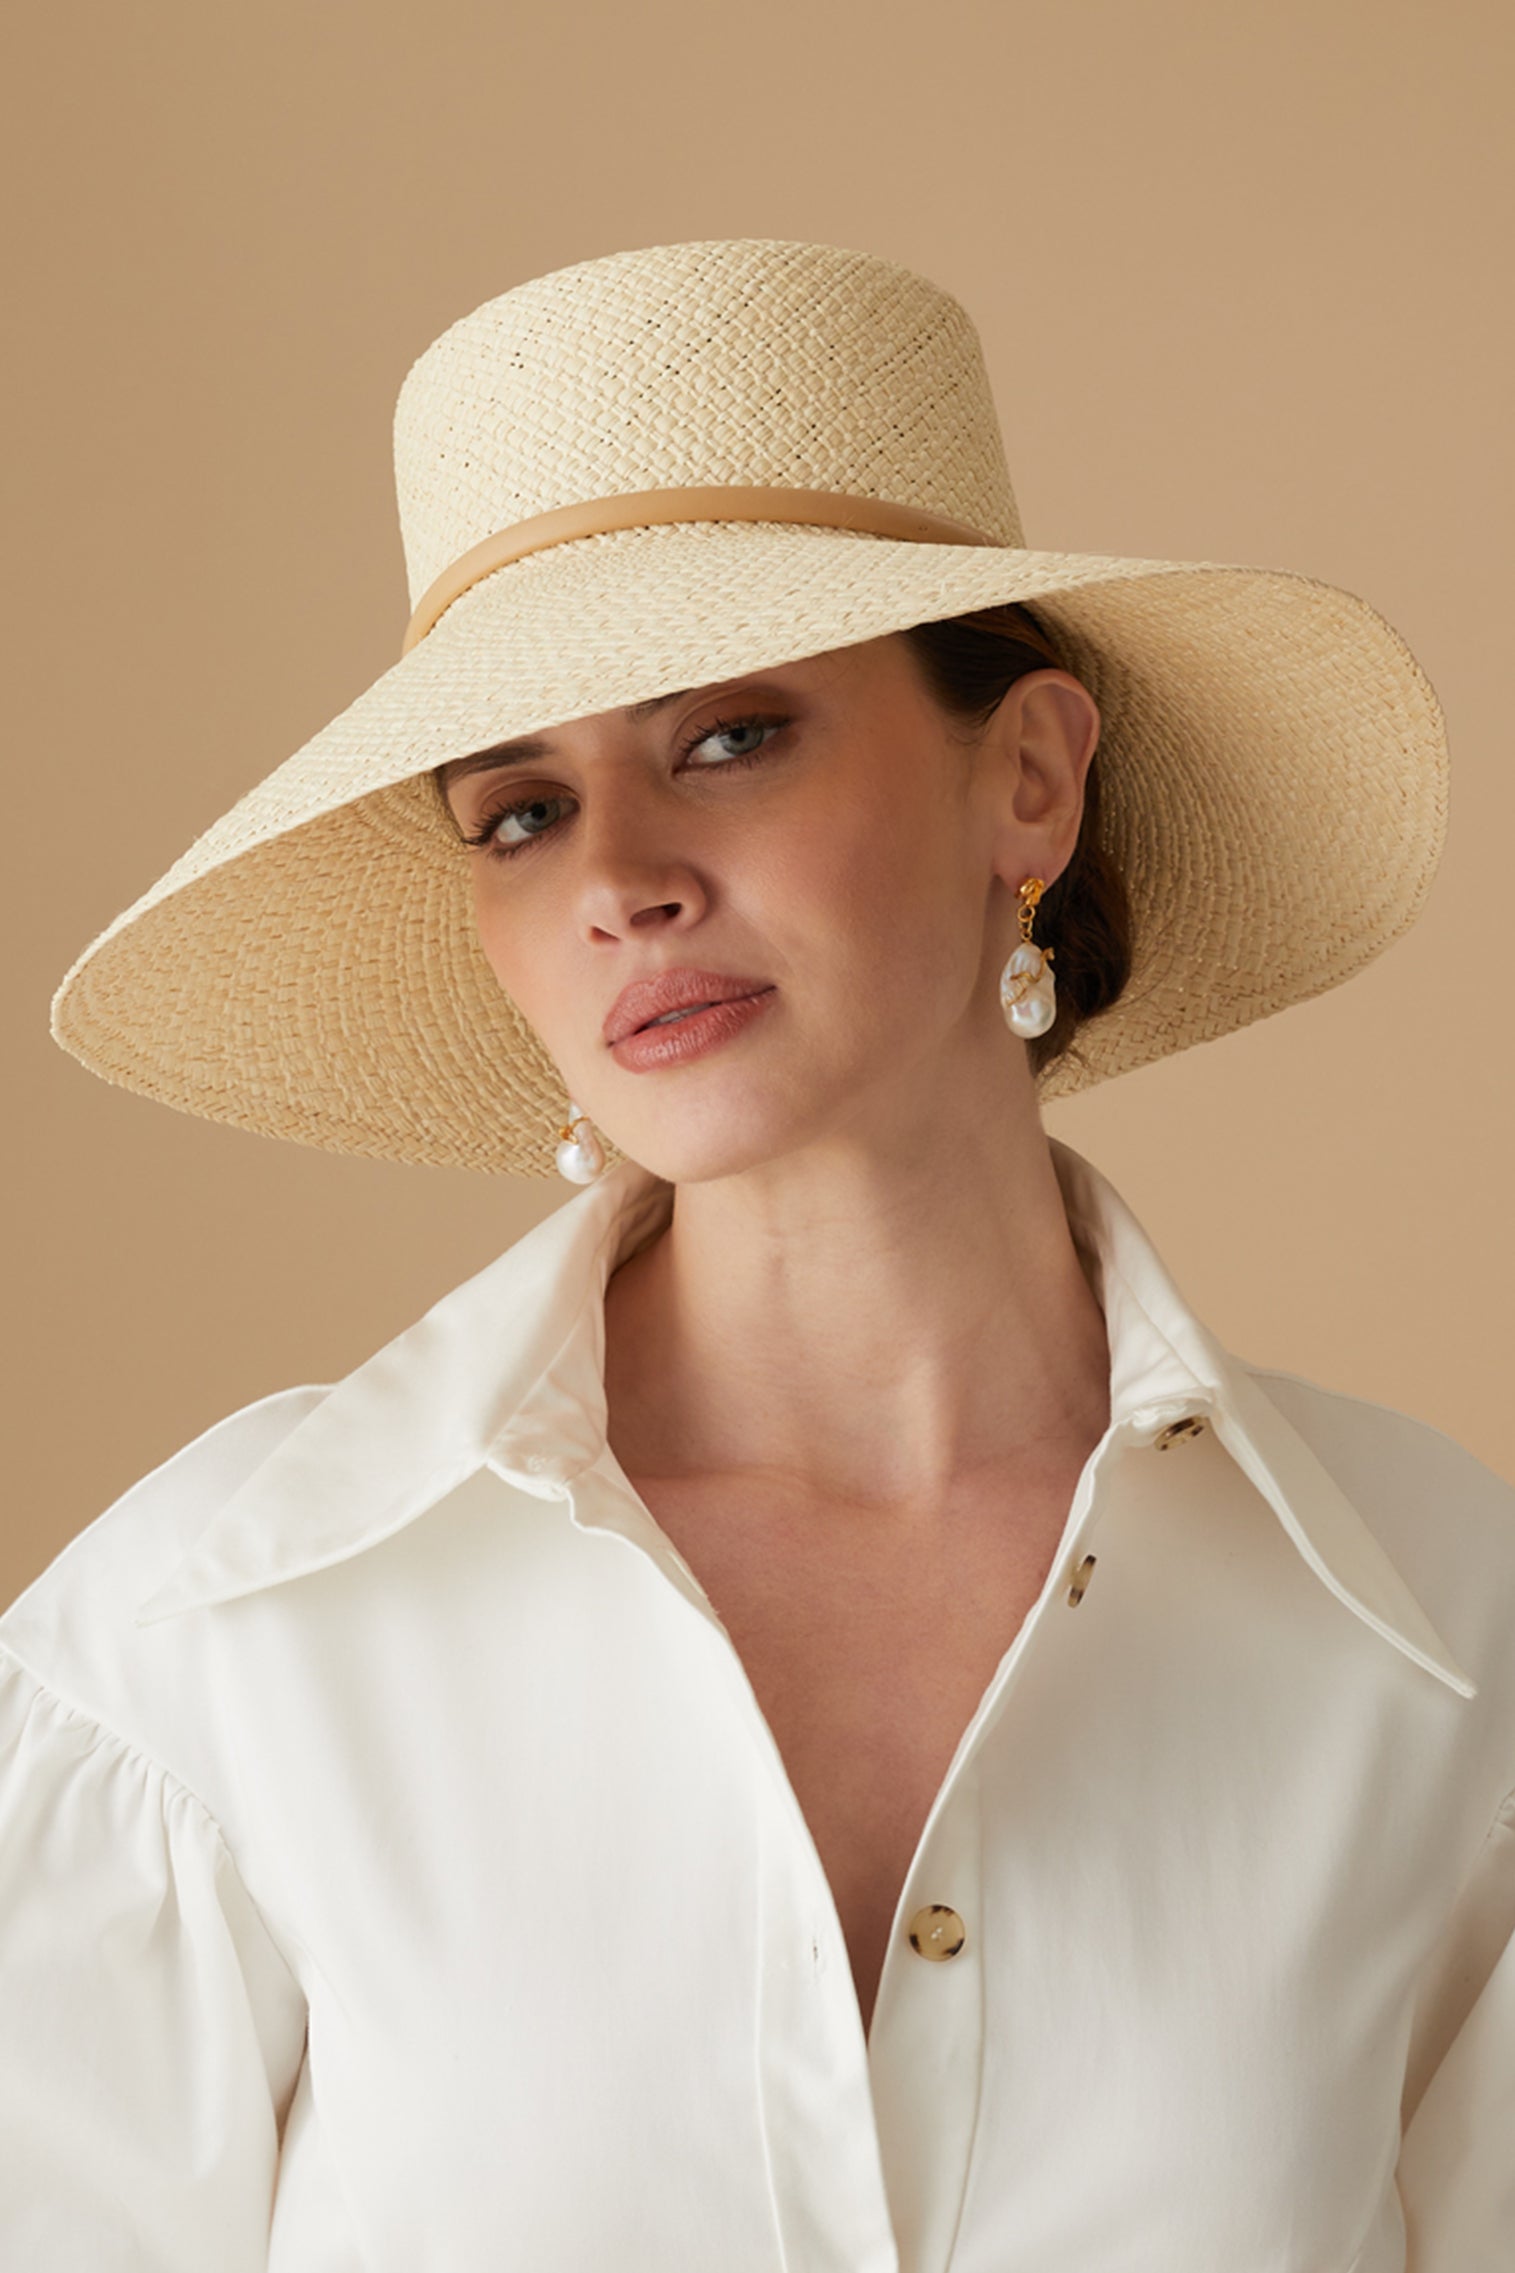 Summer Boaters & Sun Hats for Men & Women from Lock & Co.